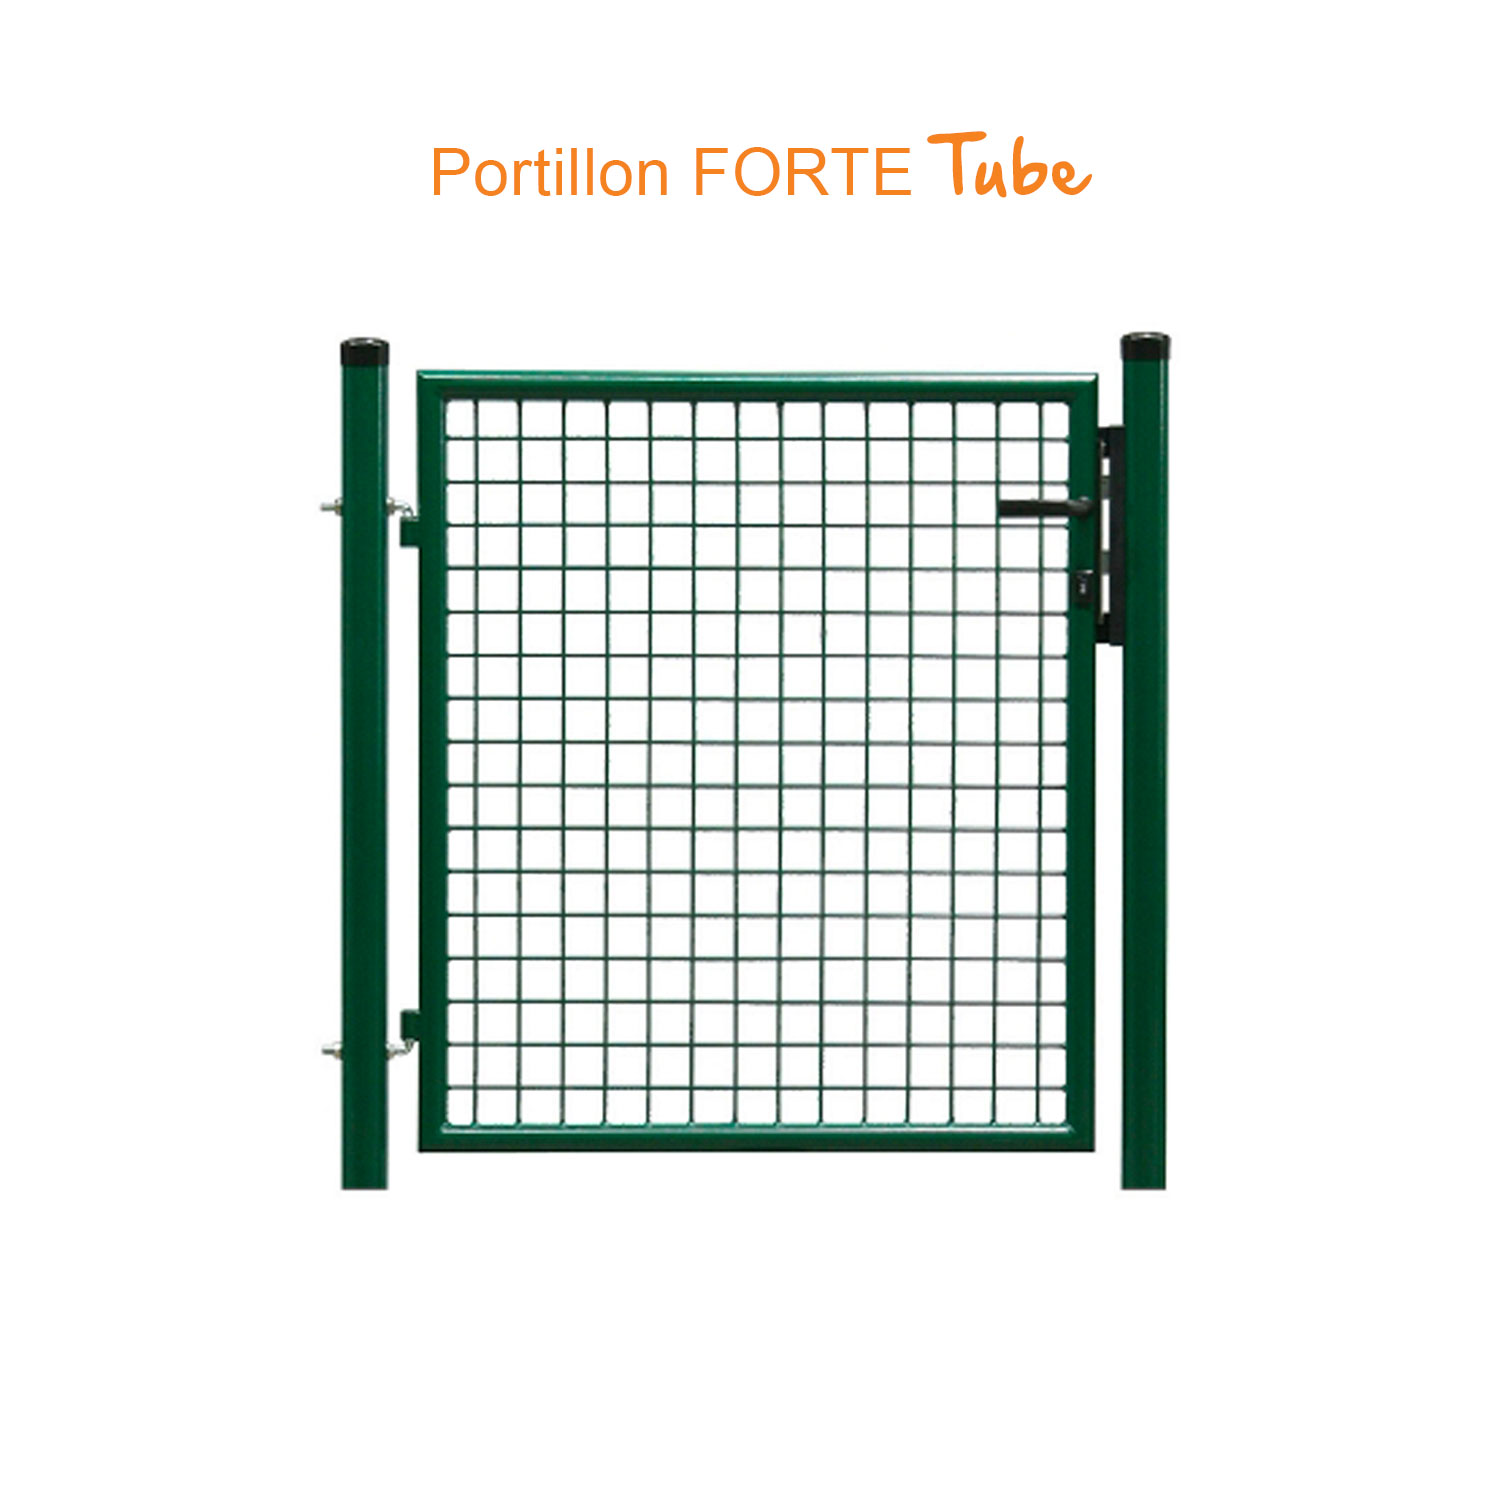 Destockage - Portillon grillagé FORTE tube